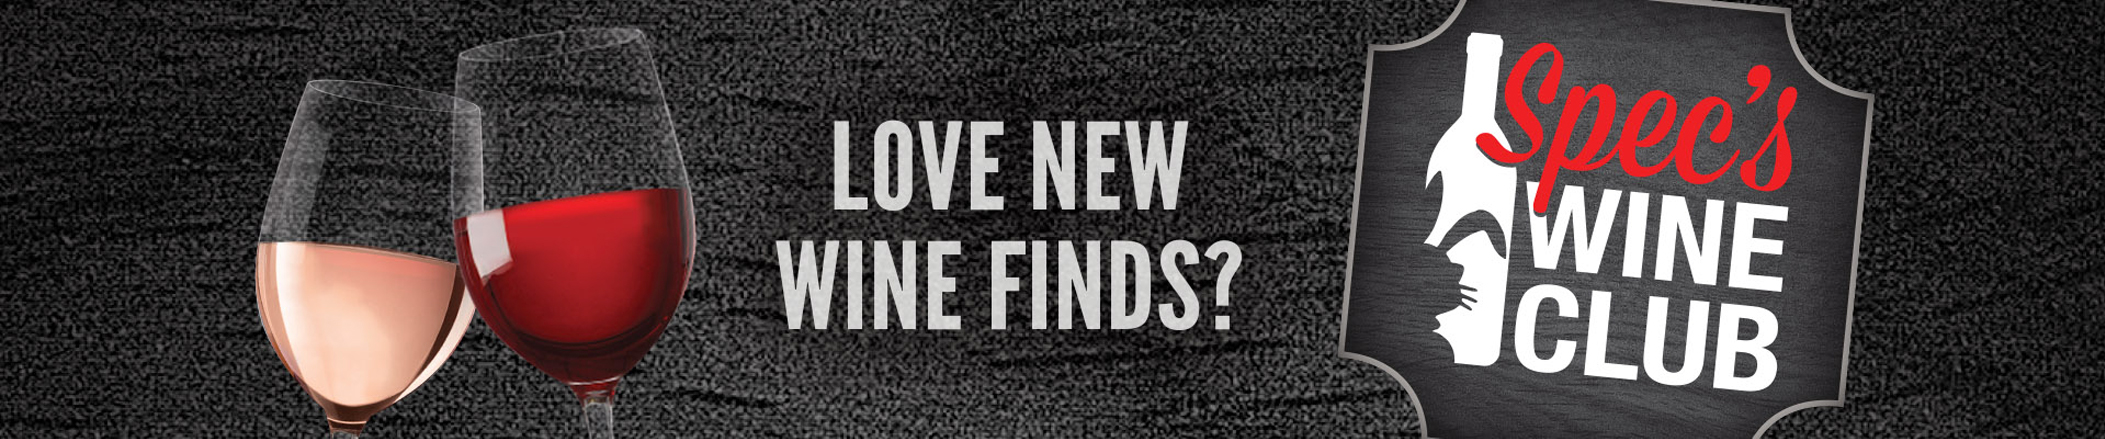 Love New Wine Finds? Spec's Wine Club